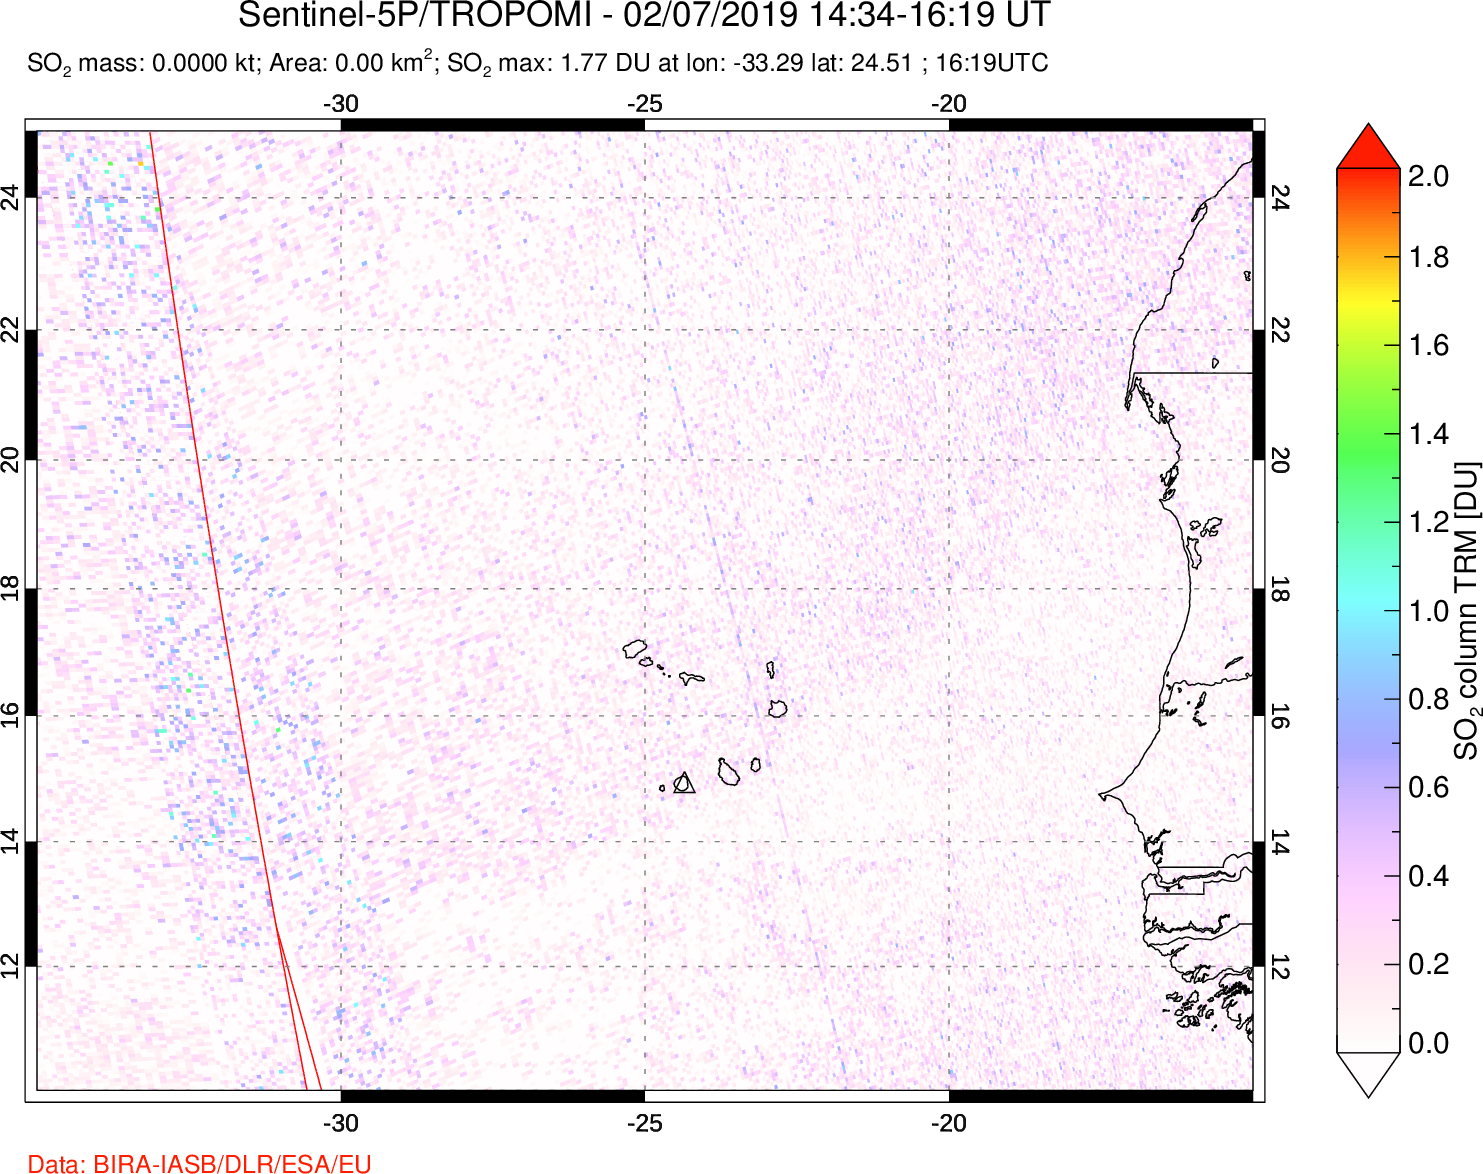 A sulfur dioxide image over Cape Verde Islands on Feb 07, 2019.